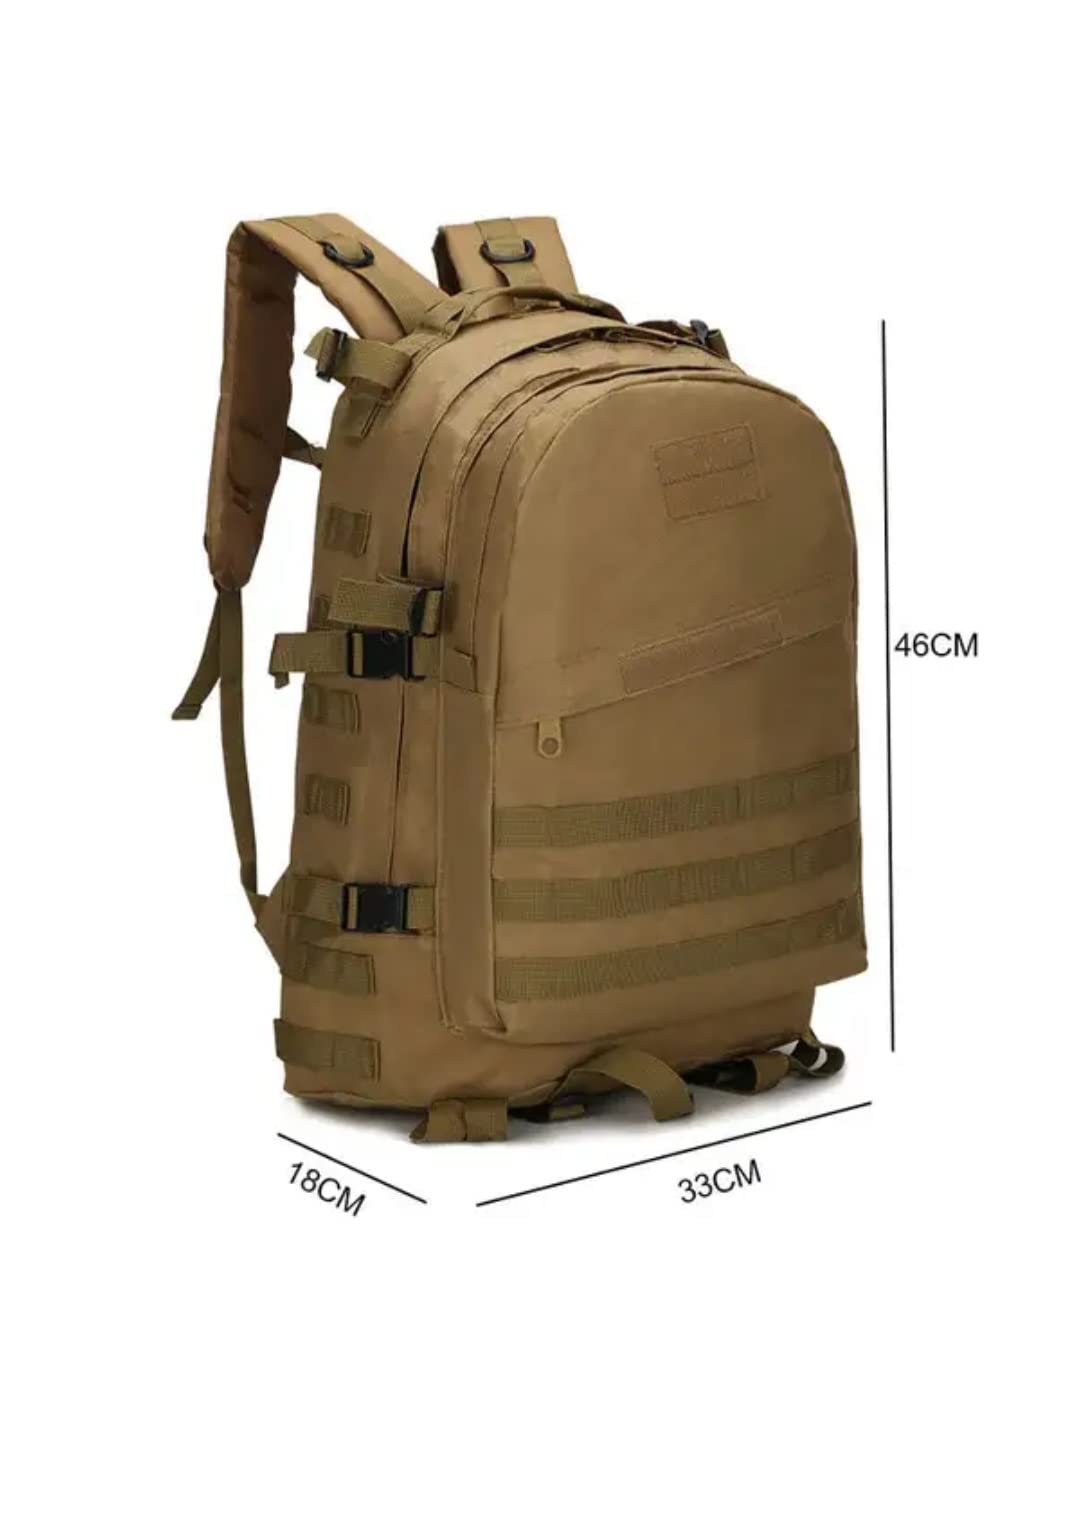 WIGGINOUT Tactical Backpack Military Large Army Daypacks (khaki)